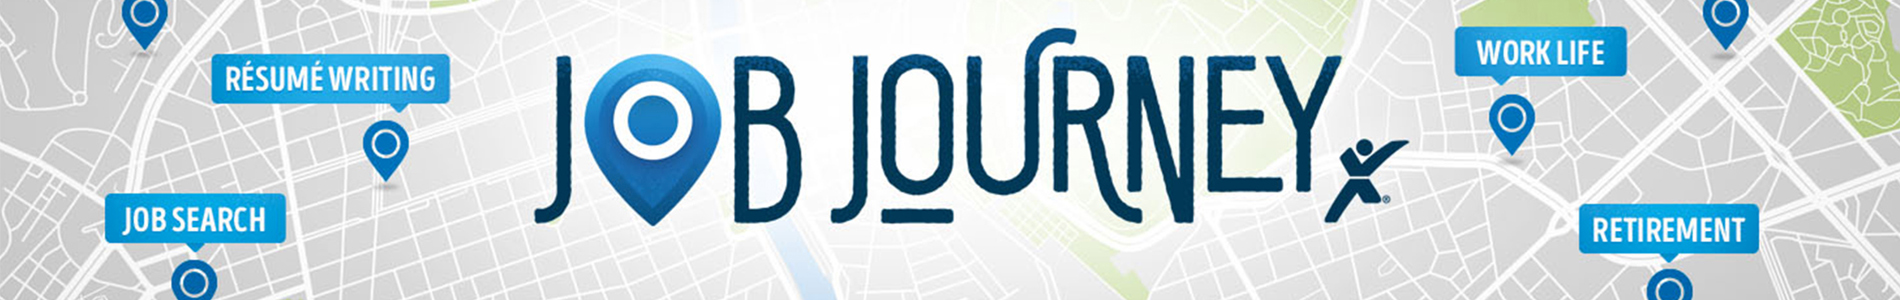 Job Journey - Internal Blog Banner